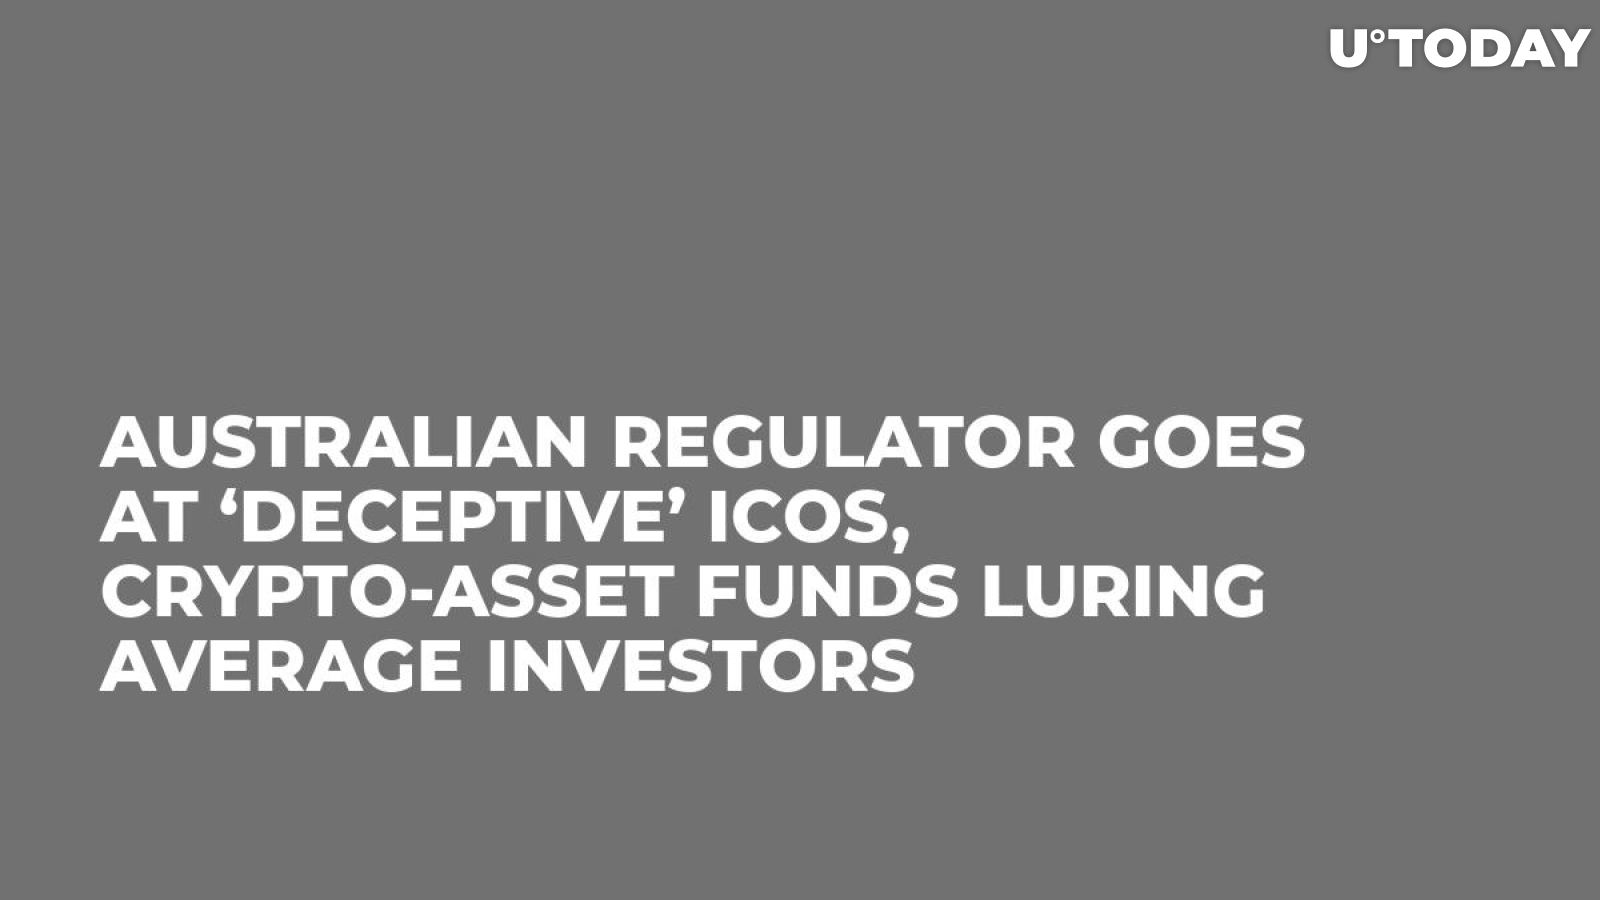 Australian Regulator Goes at ‘Deceptive’ ICOs, Crypto-Asset Funds Luring Average Investors